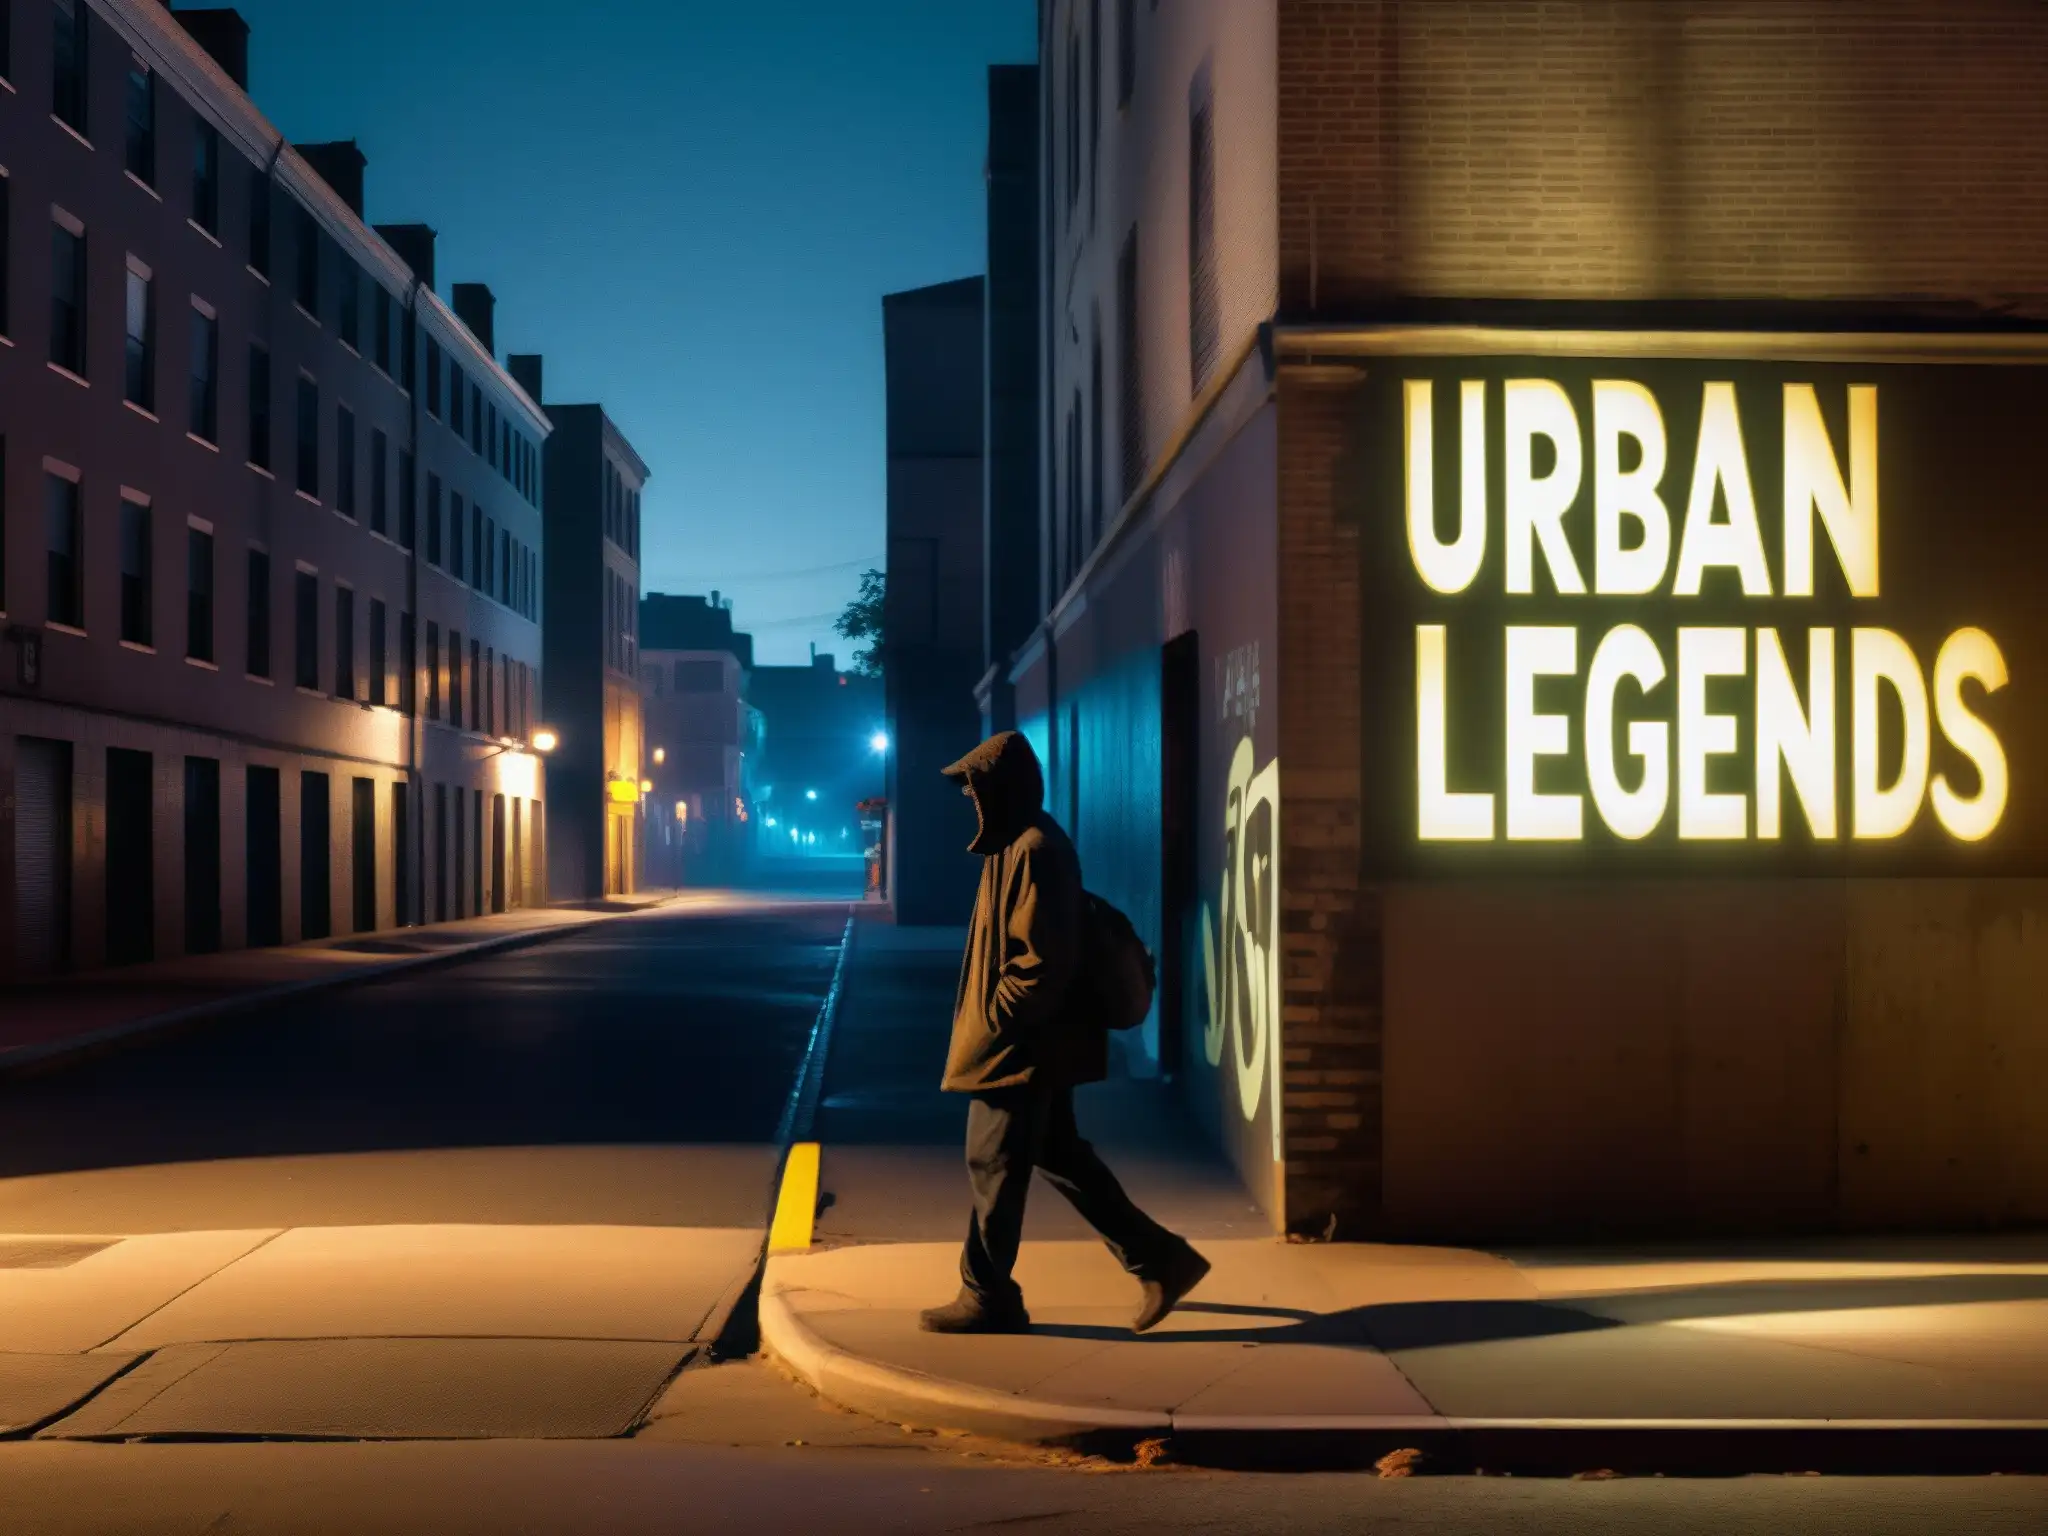 Un solitario caminante en una calle urbana oscura, iluminada por luces de la calle